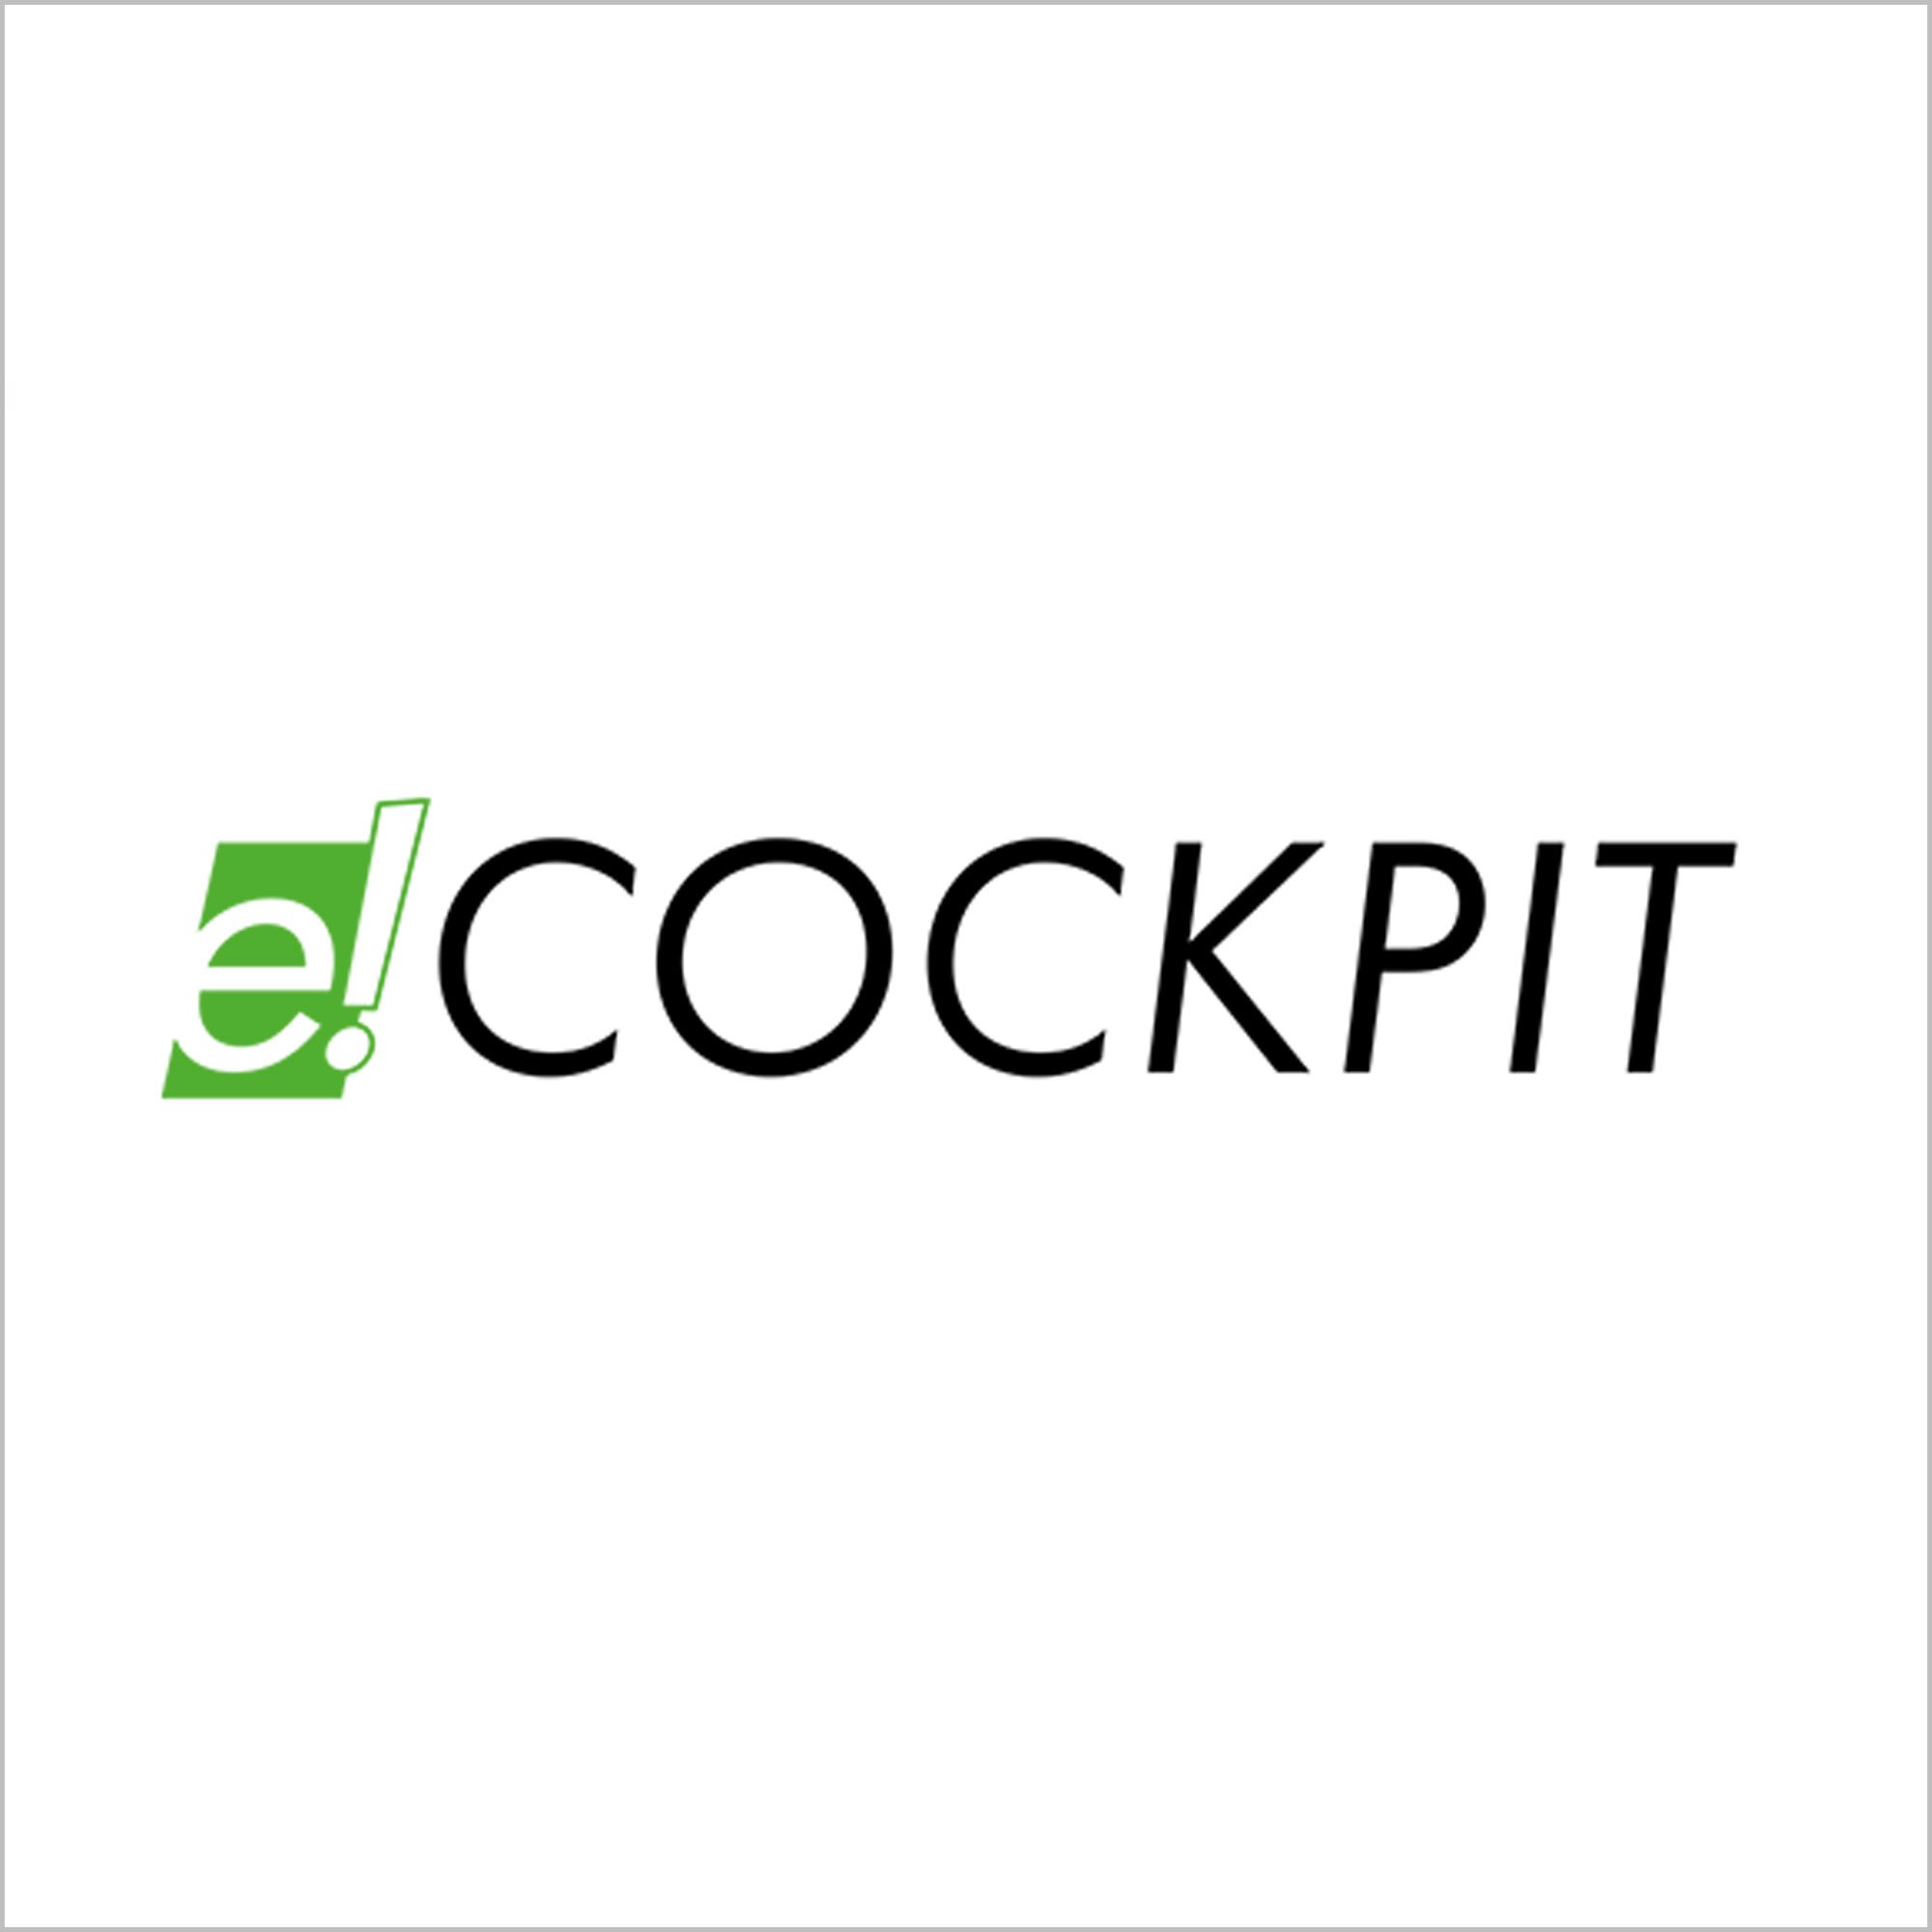 ecockpit_logo.jpg